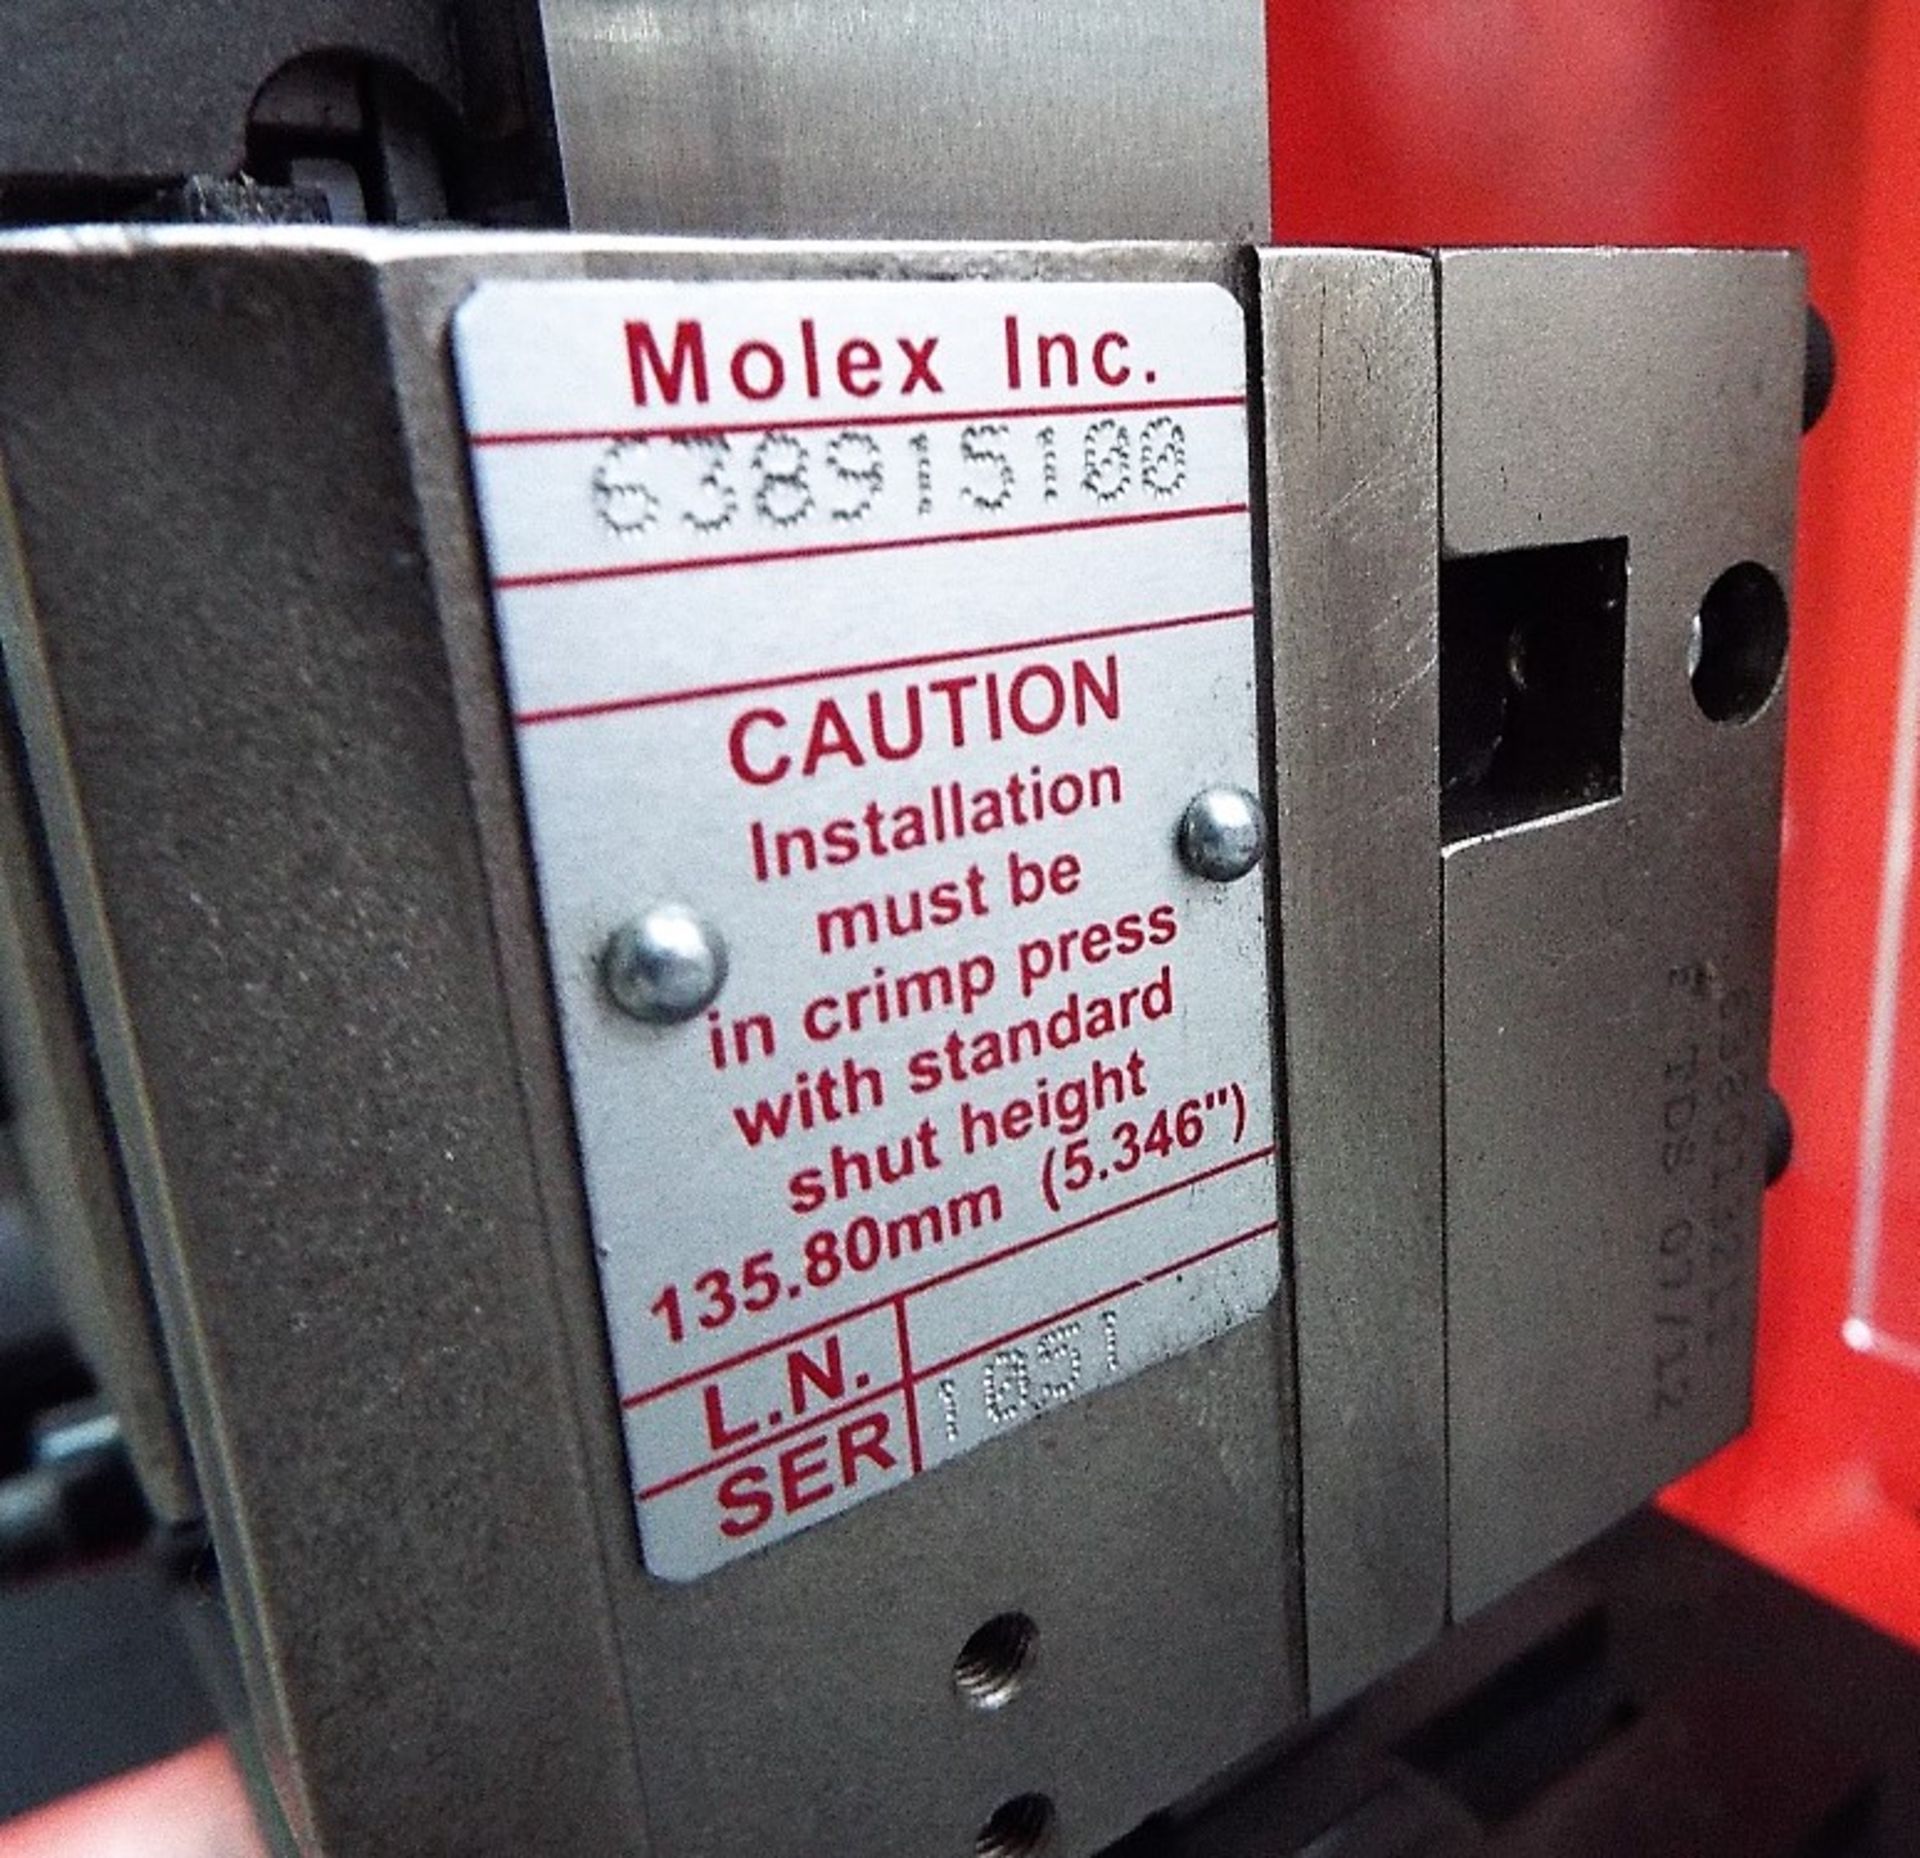 Molex TM3000 Universal Press,Complete With Fineadjust Applicators. - Image 5 of 18